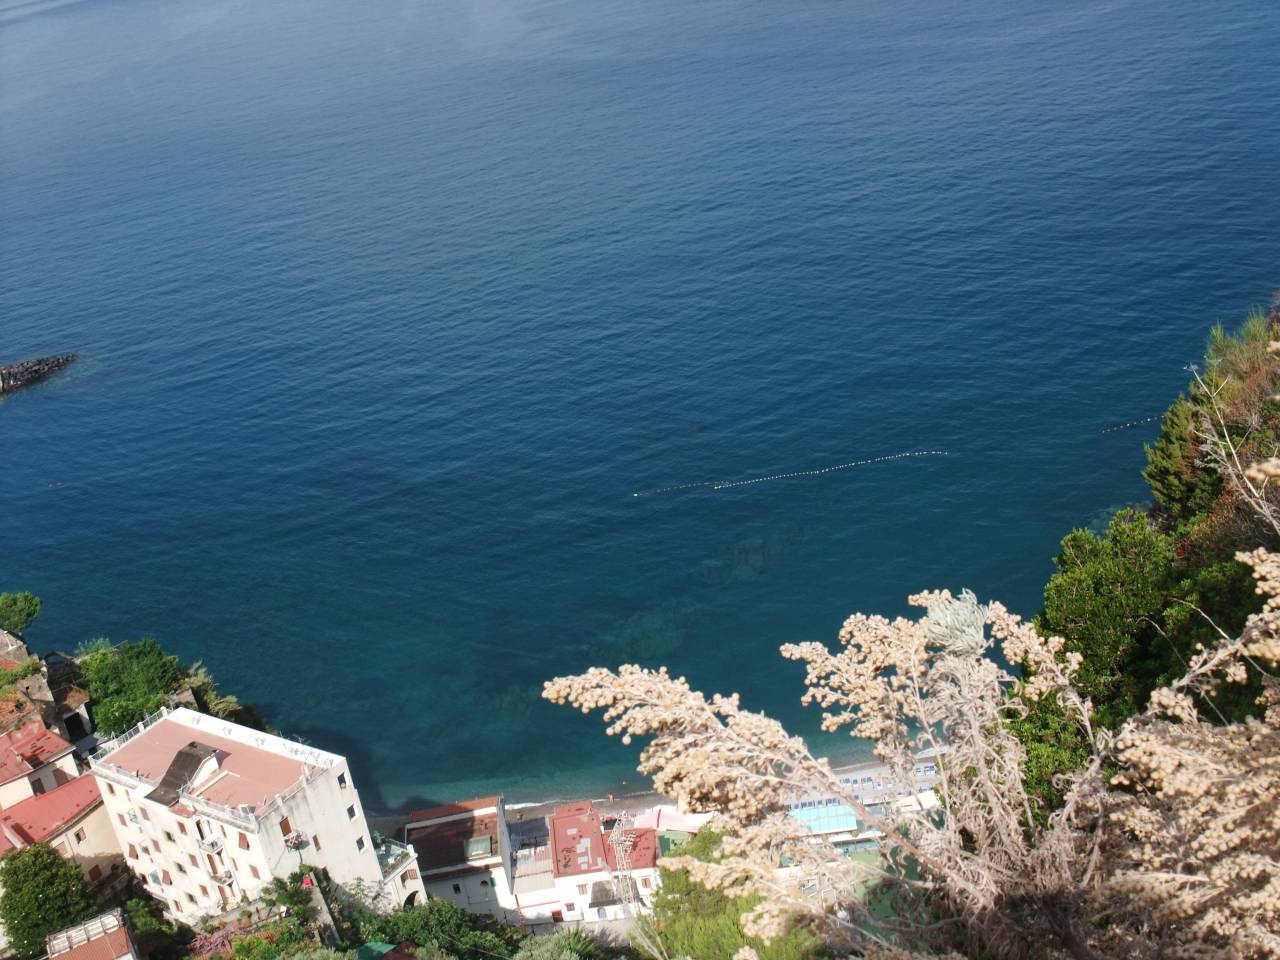 The Amalfi Coast: DSCF8687